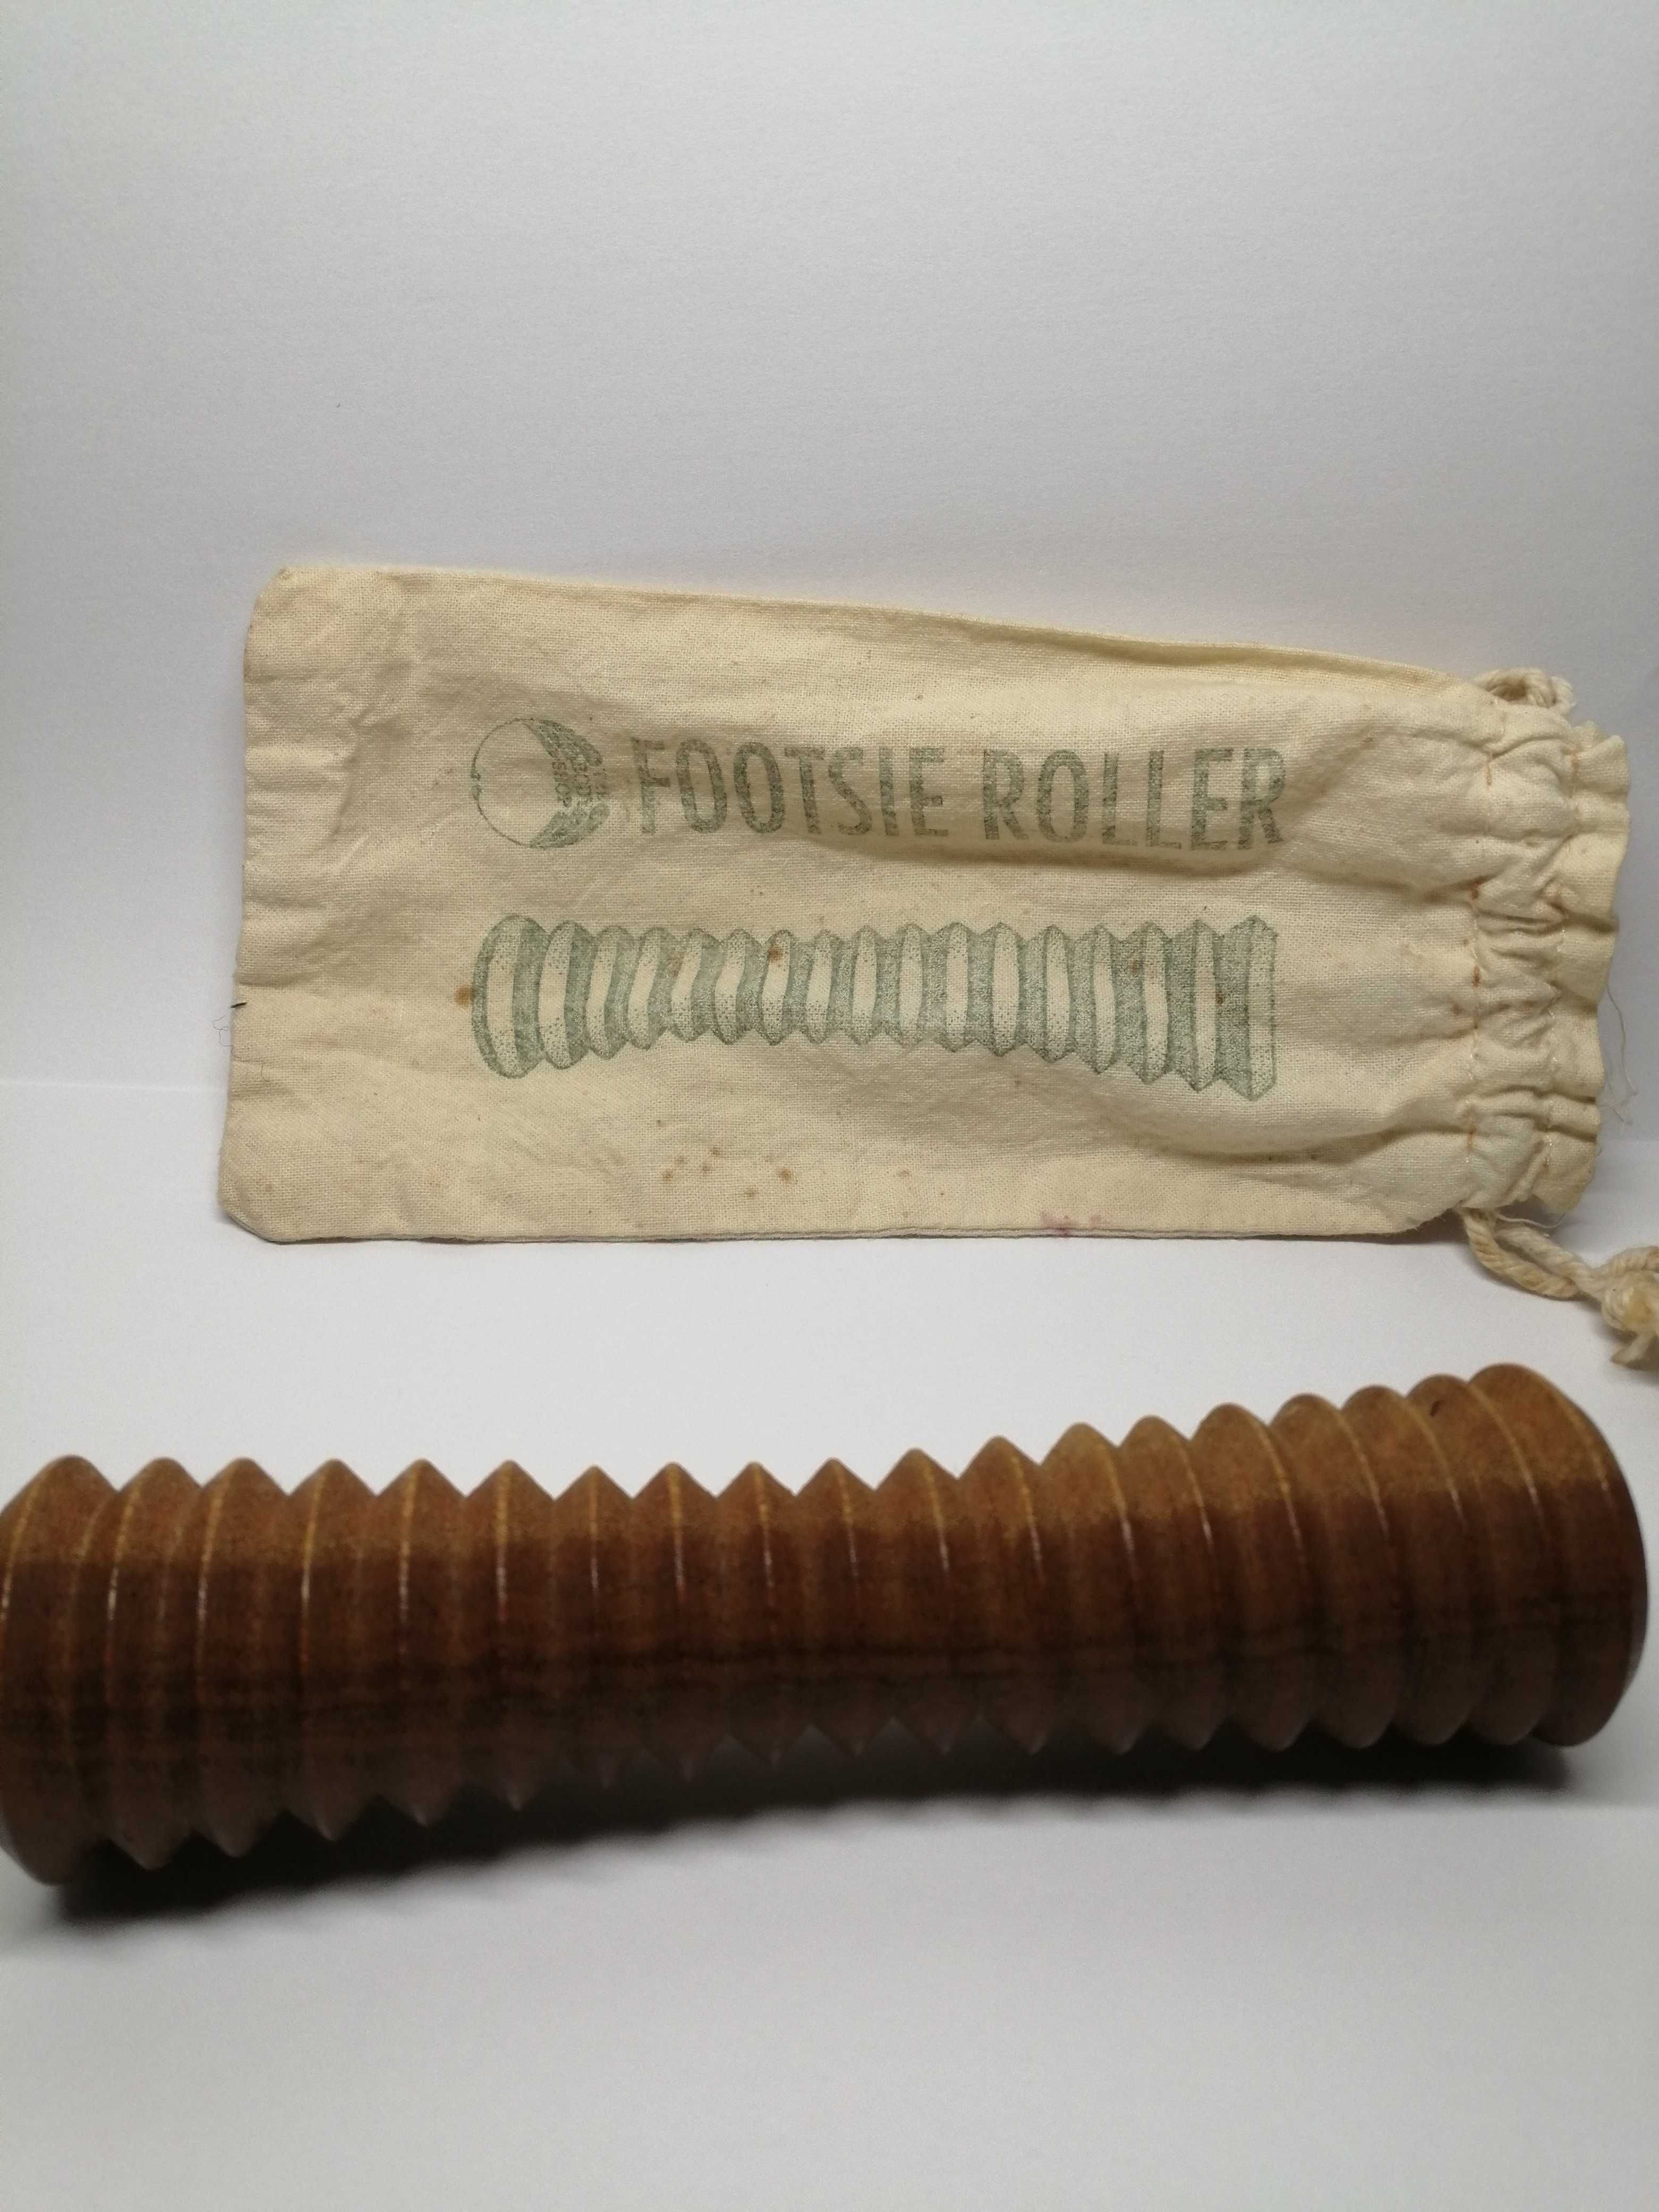 Footsie Roller - Body Shop - Masaż Stóp